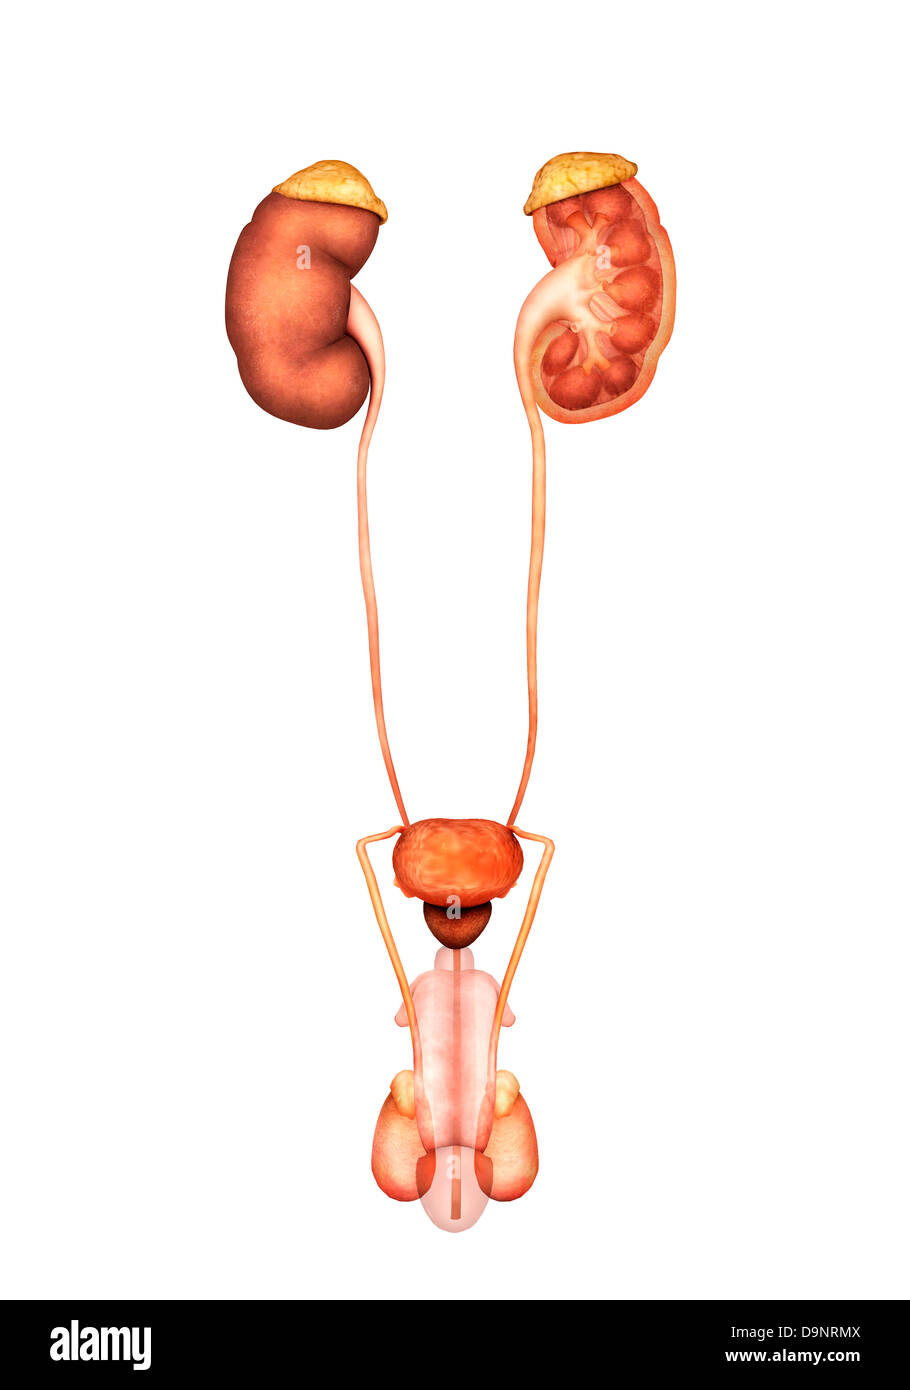 Anatomia umana del sistema urinario, vista frontale. Foto Stock